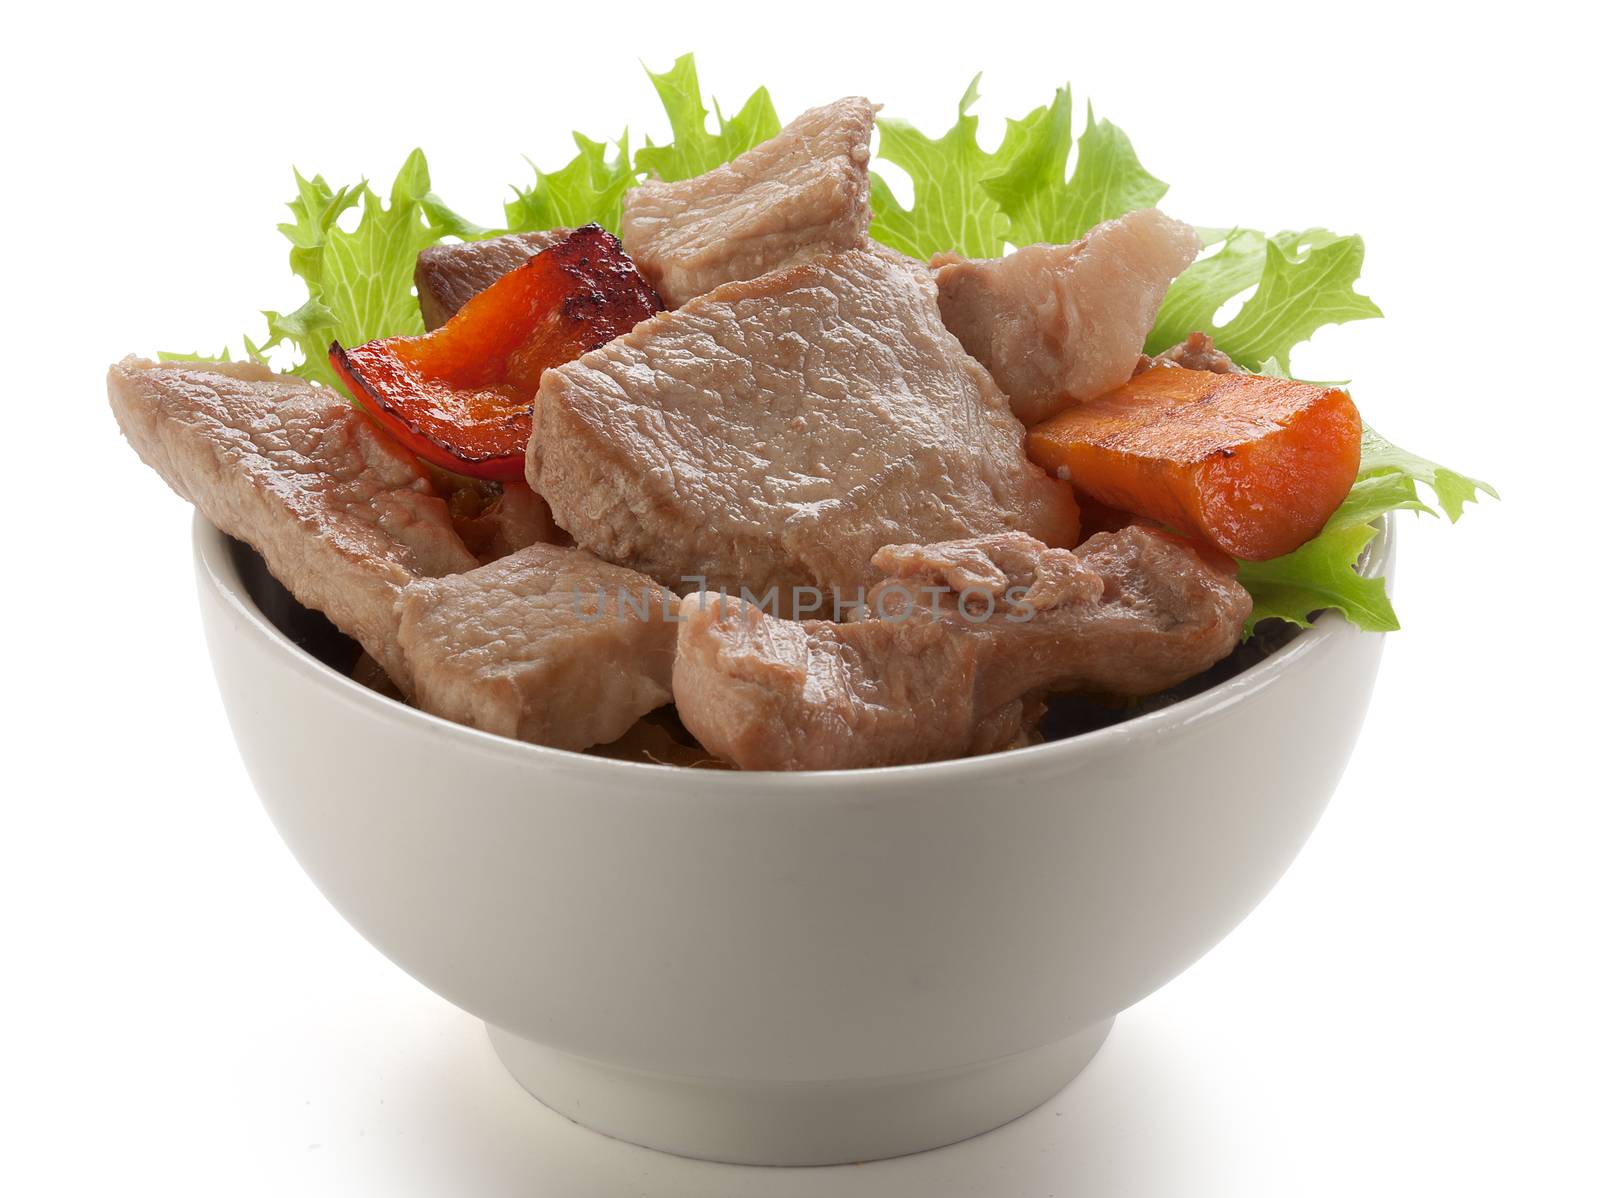 Pork roast in the bowl by Angorius